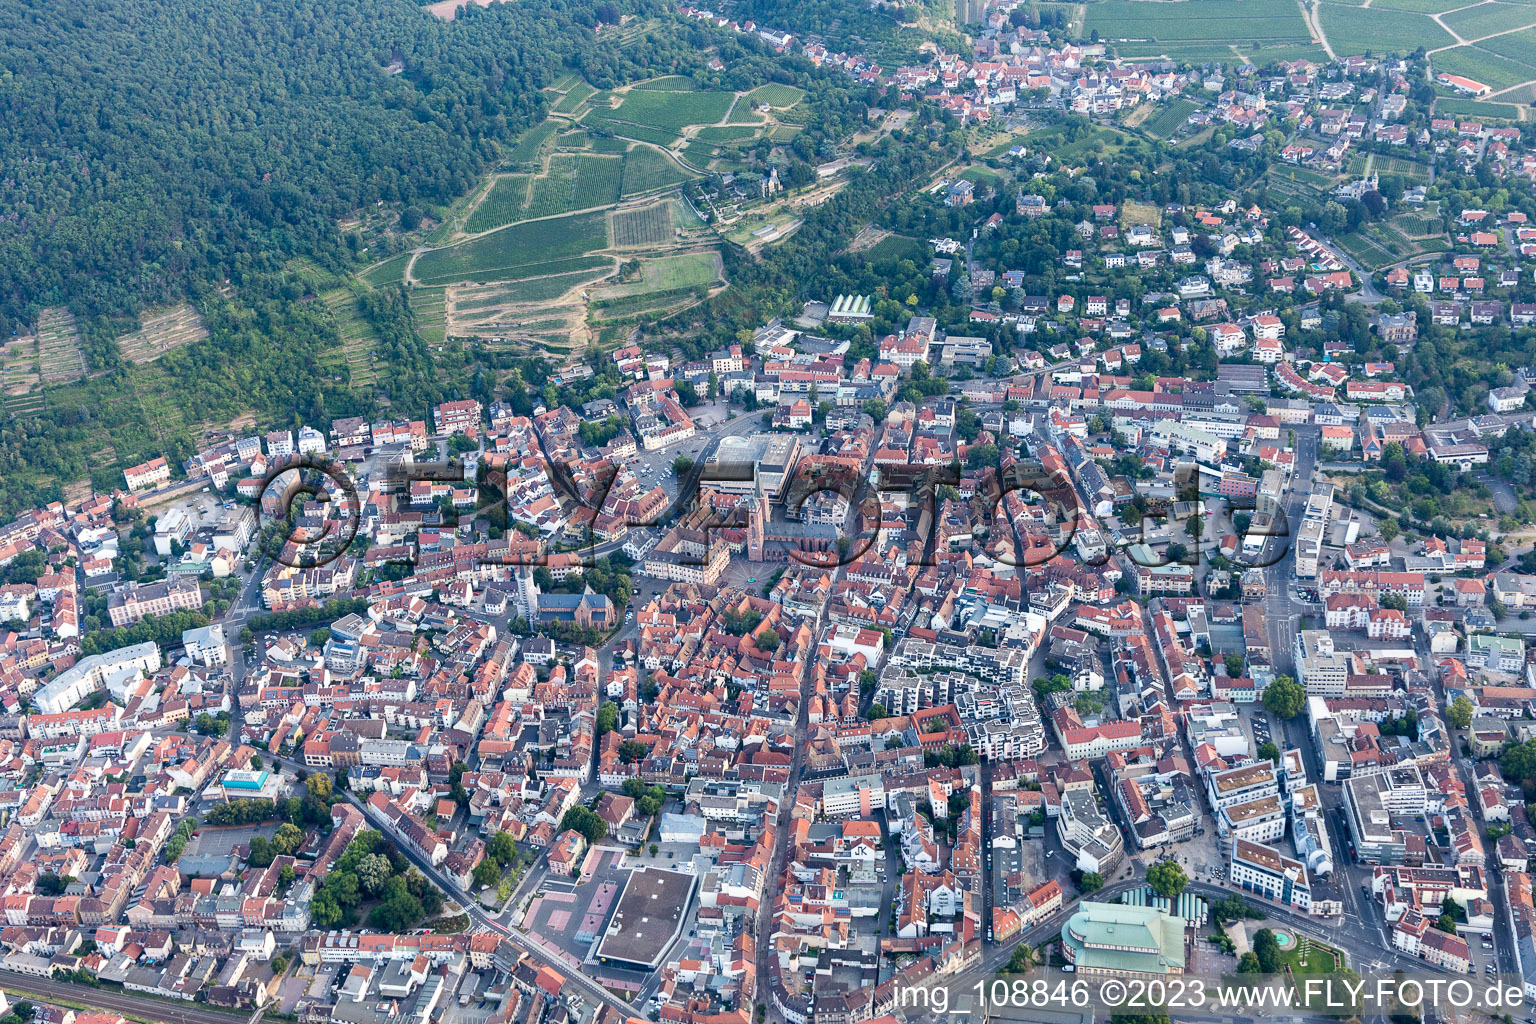 Drone recording of Neustadt an der Weinstraße in the state Rhineland-Palatinate, Germany